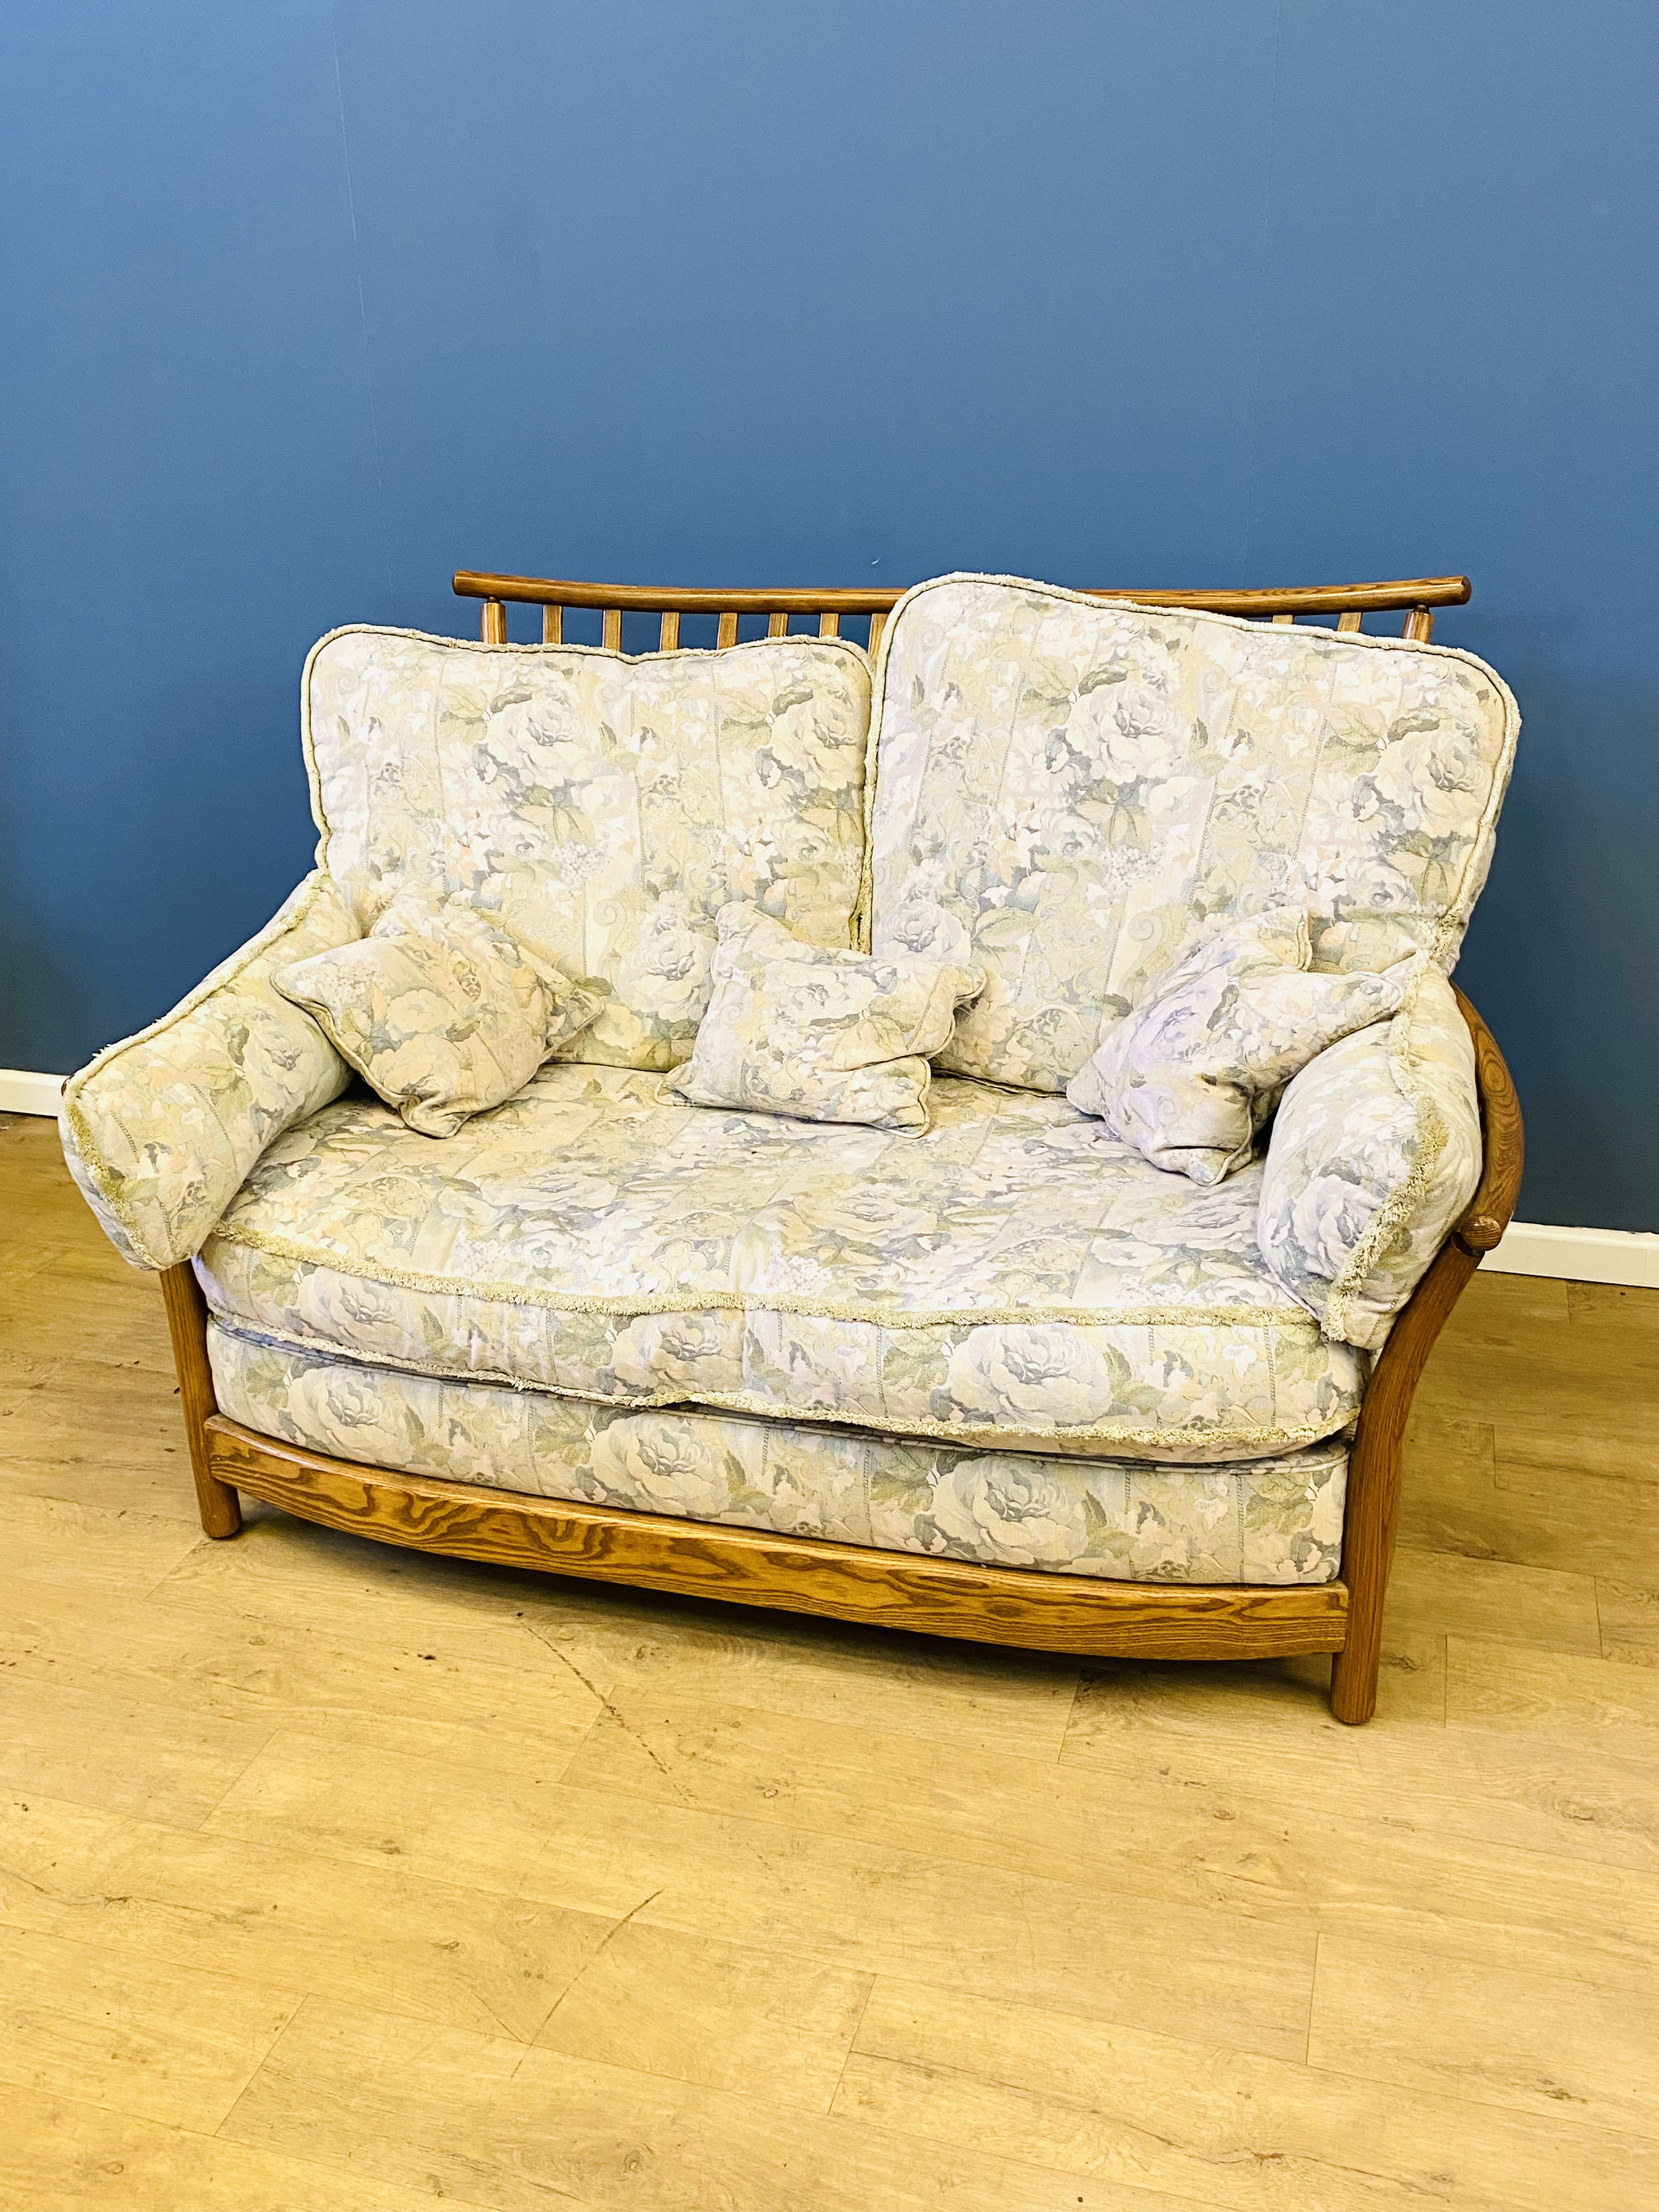 Ercol Renaissance two seat sofa - Image 2 of 4